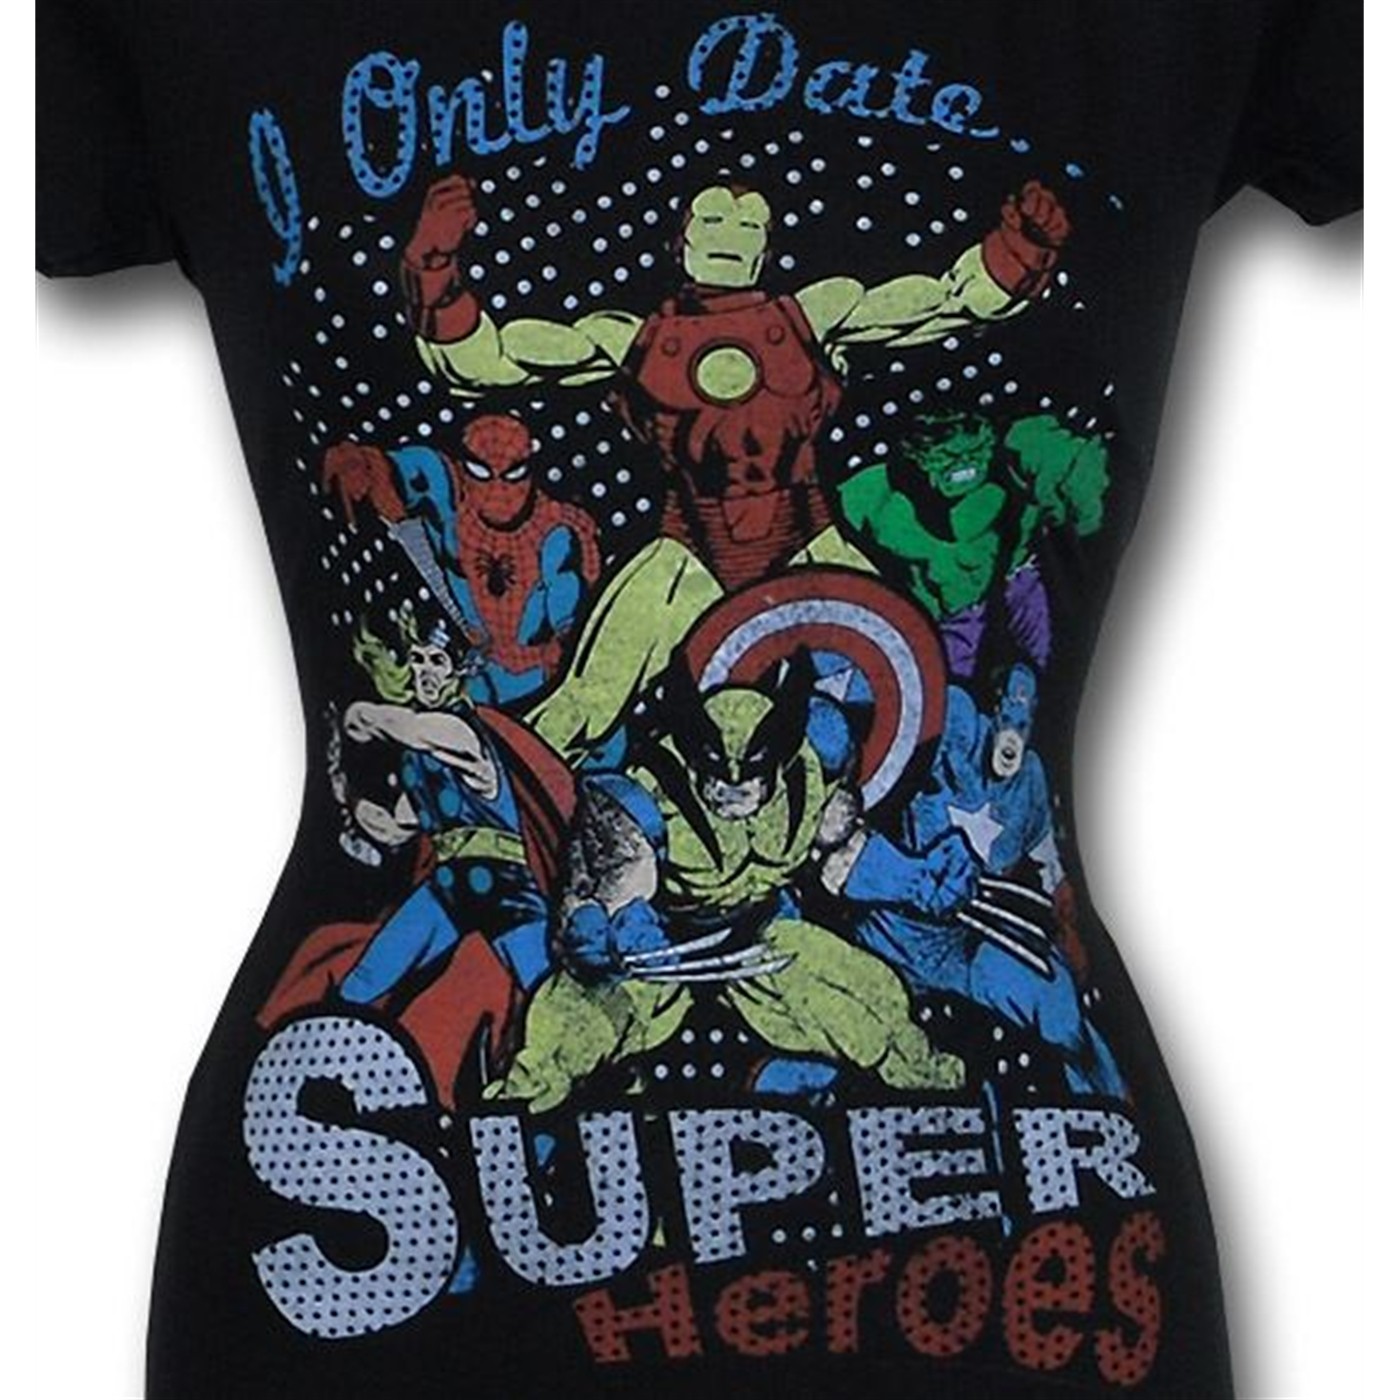 I Only Date Superheroes Black Junior T-Shirt